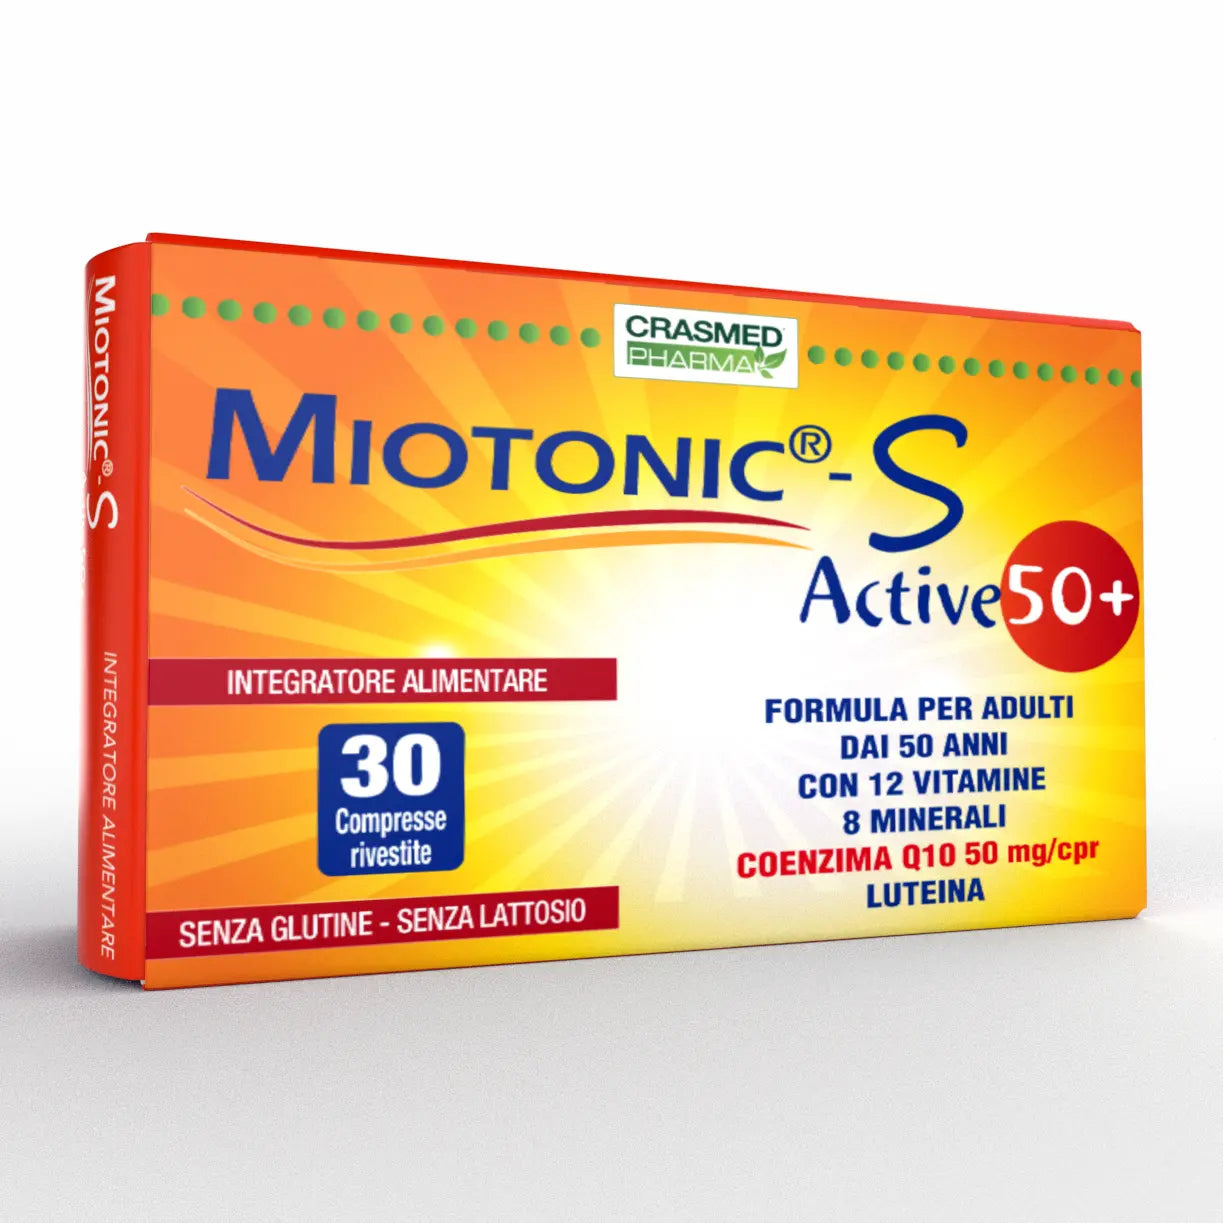 MIOTONIC®-S ACTIVE 50+ 30 compresse